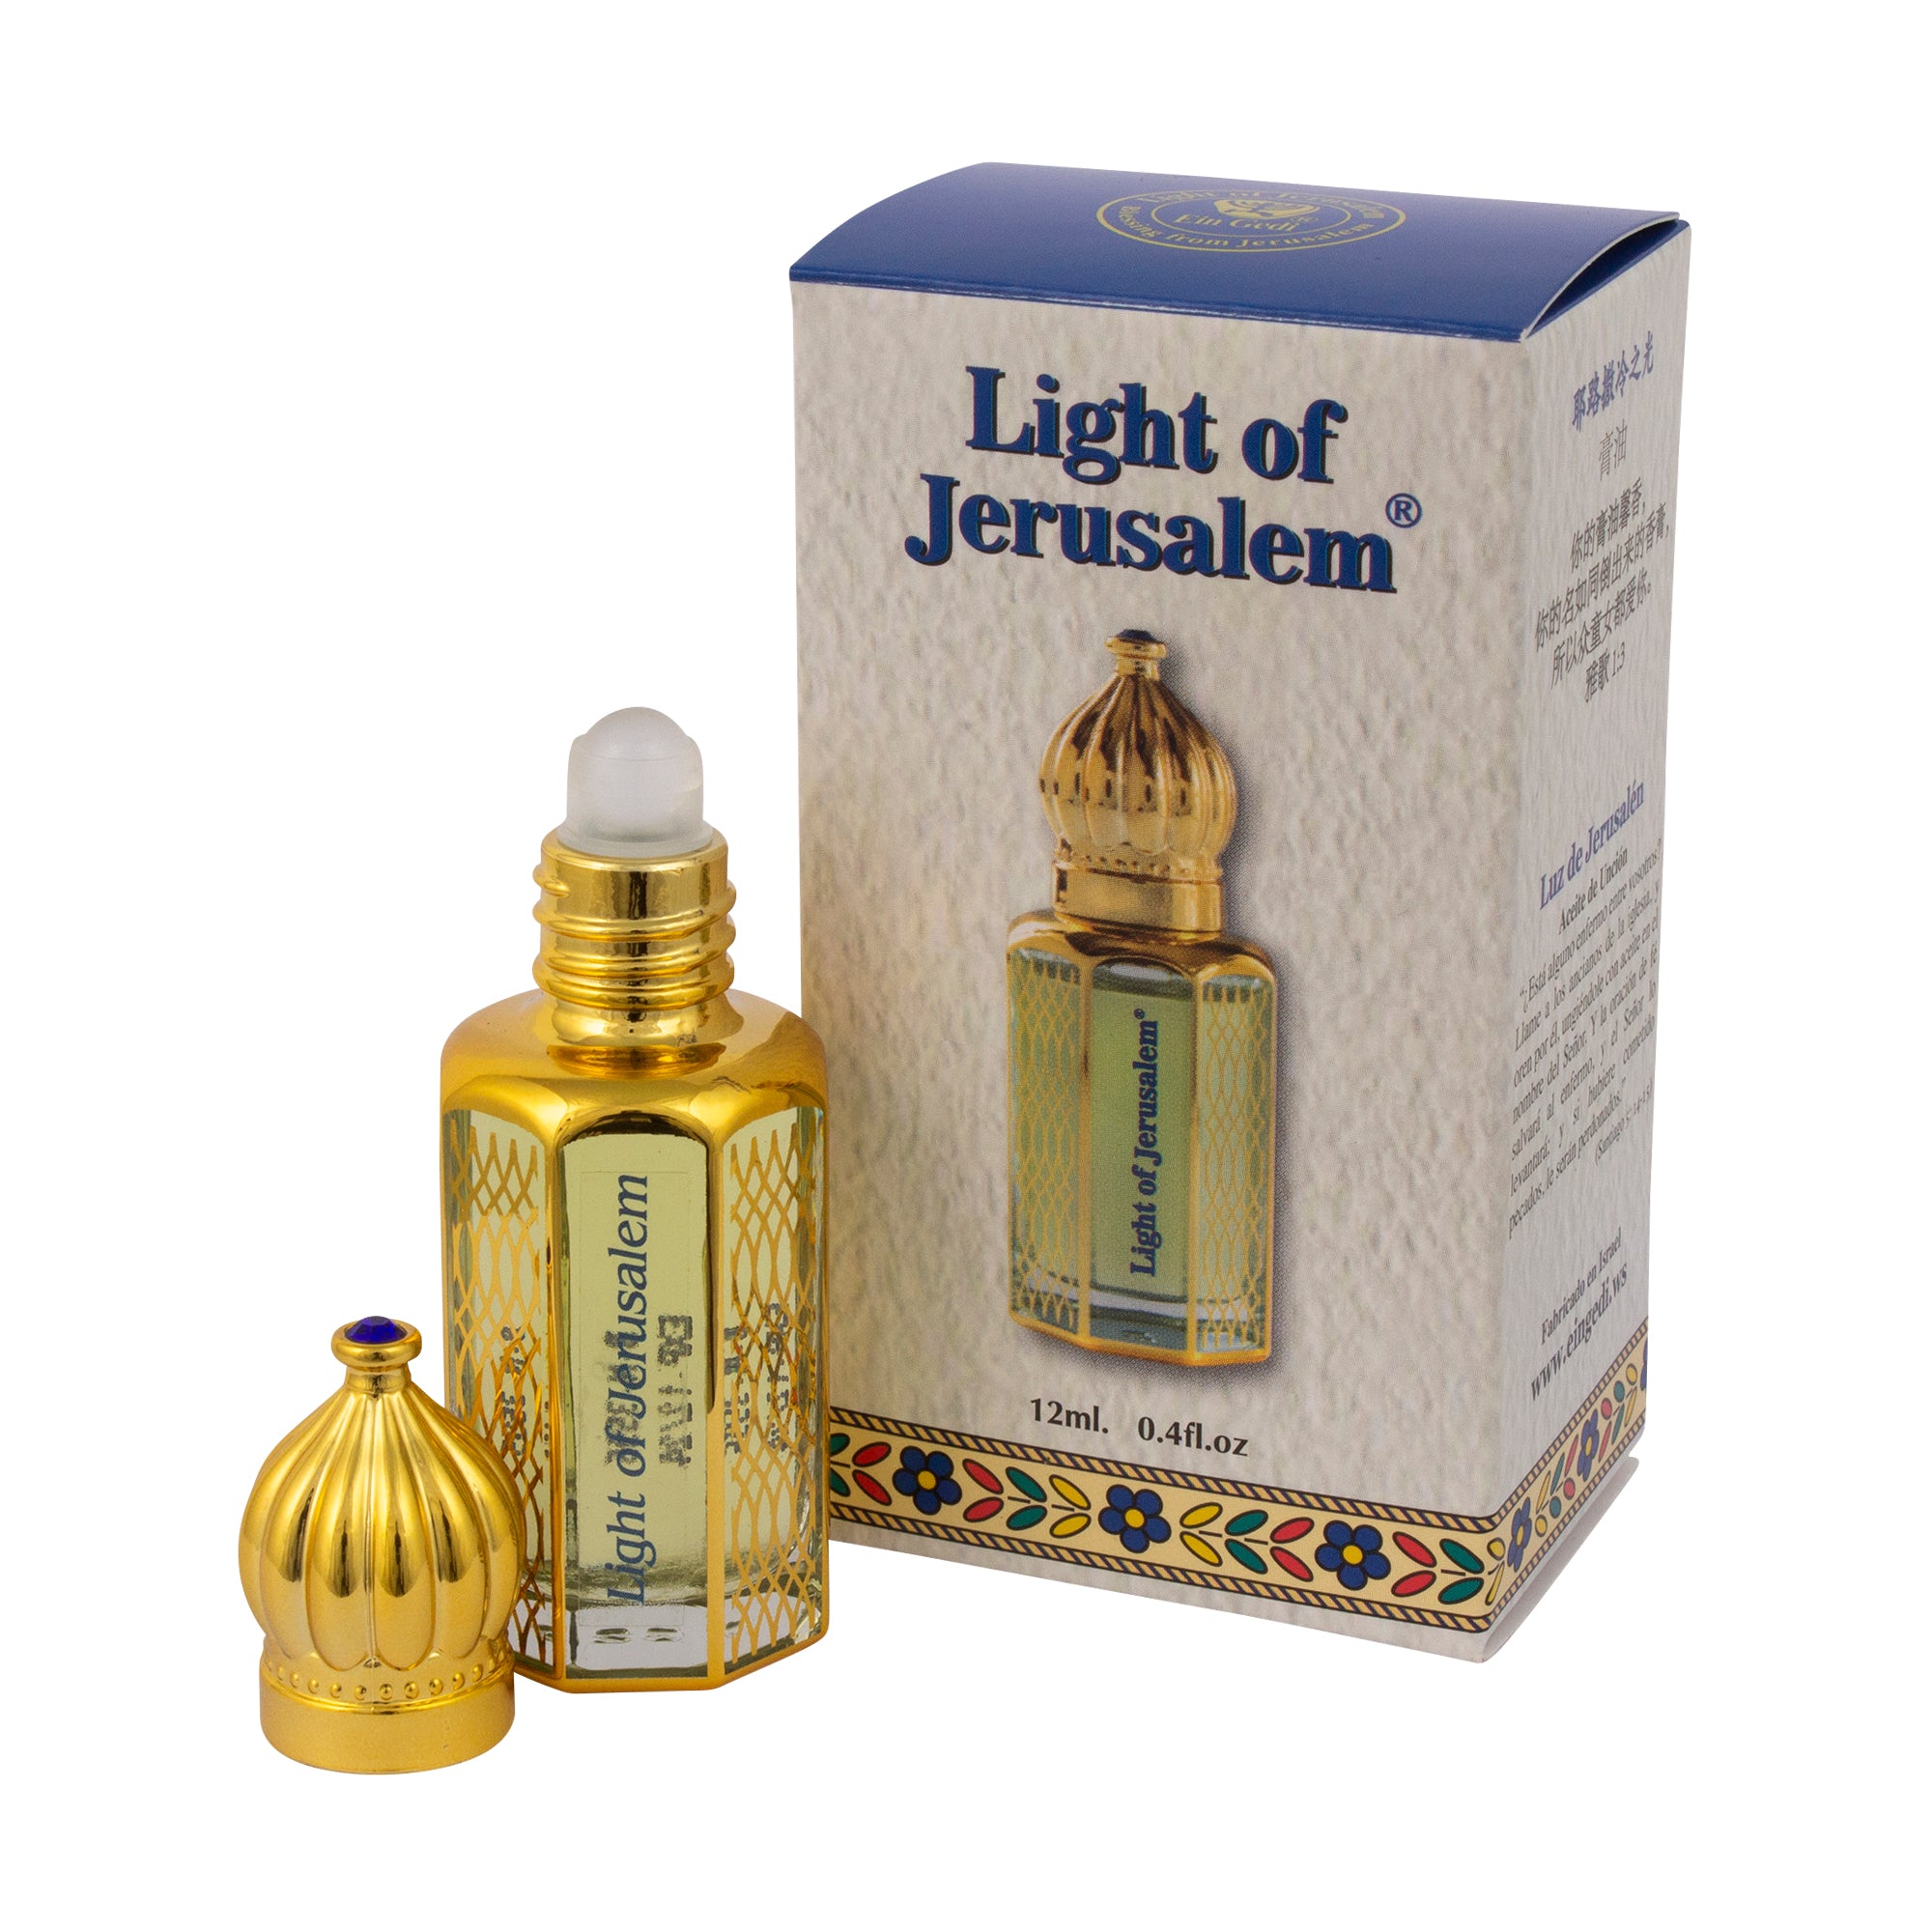 Galilee Anointing Oil - Frankincense and Myrrh 12ml 0.4 fl.oz.